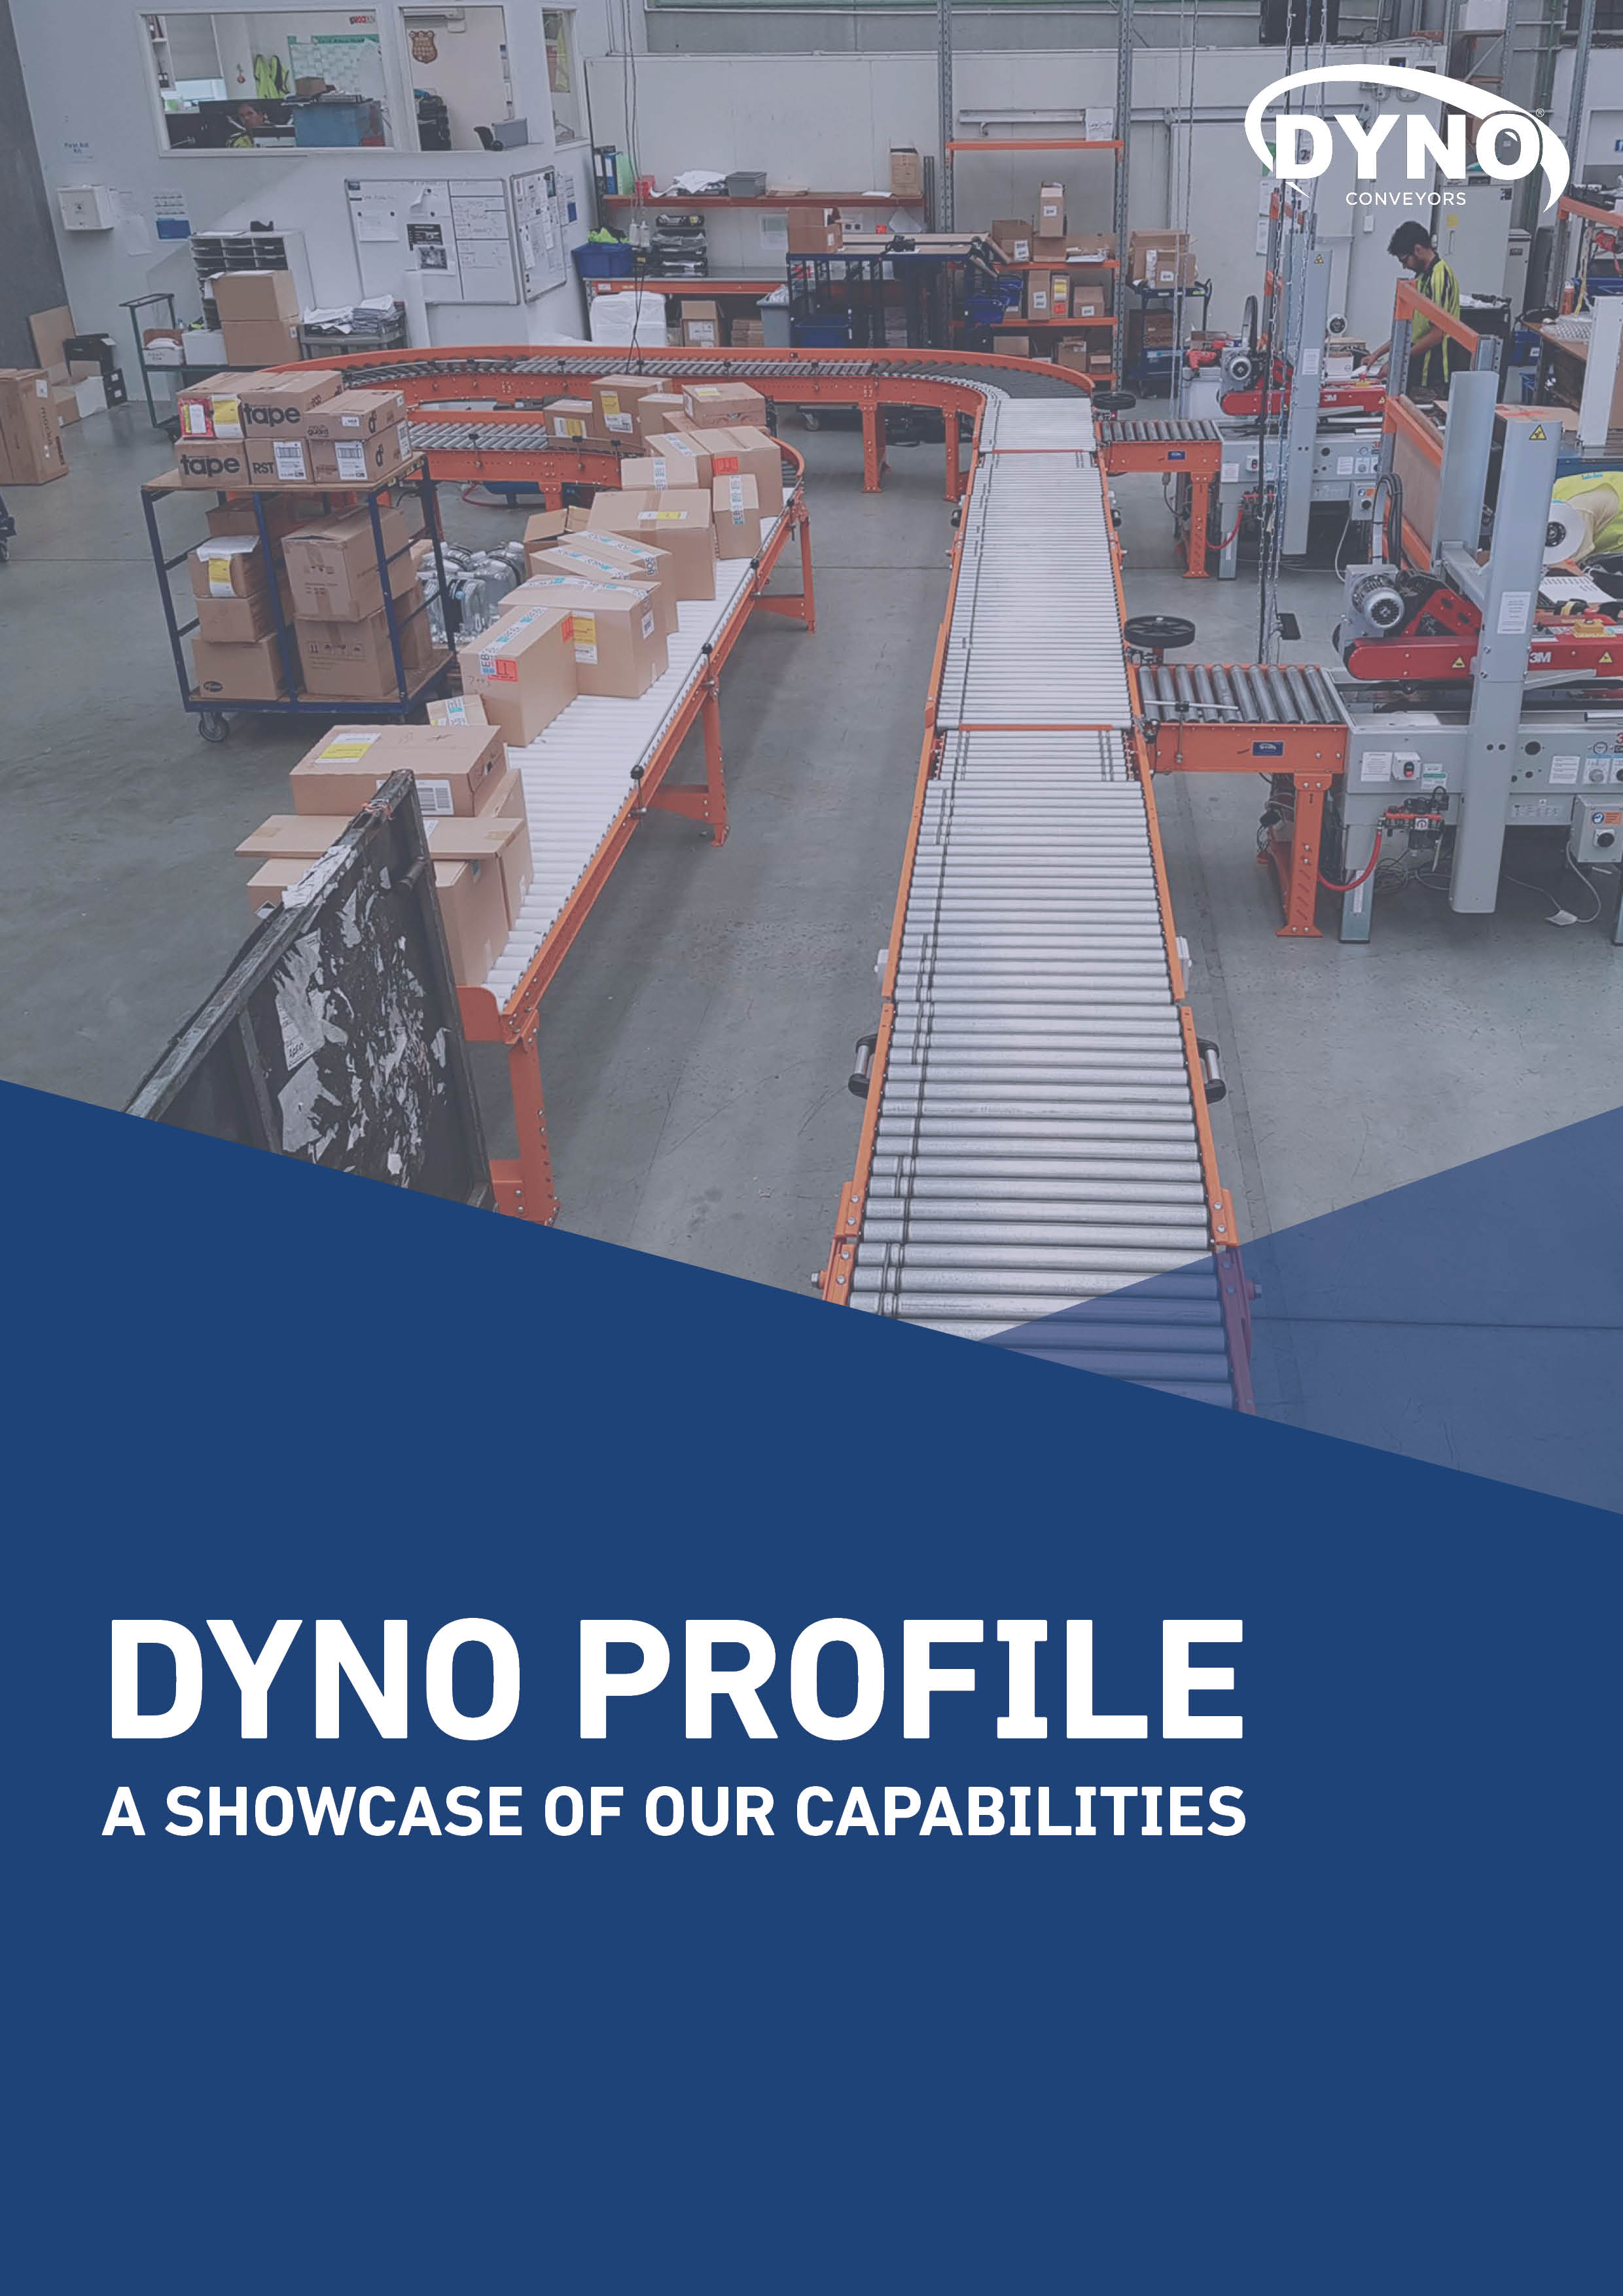 Dyno Company Profile Caption Image